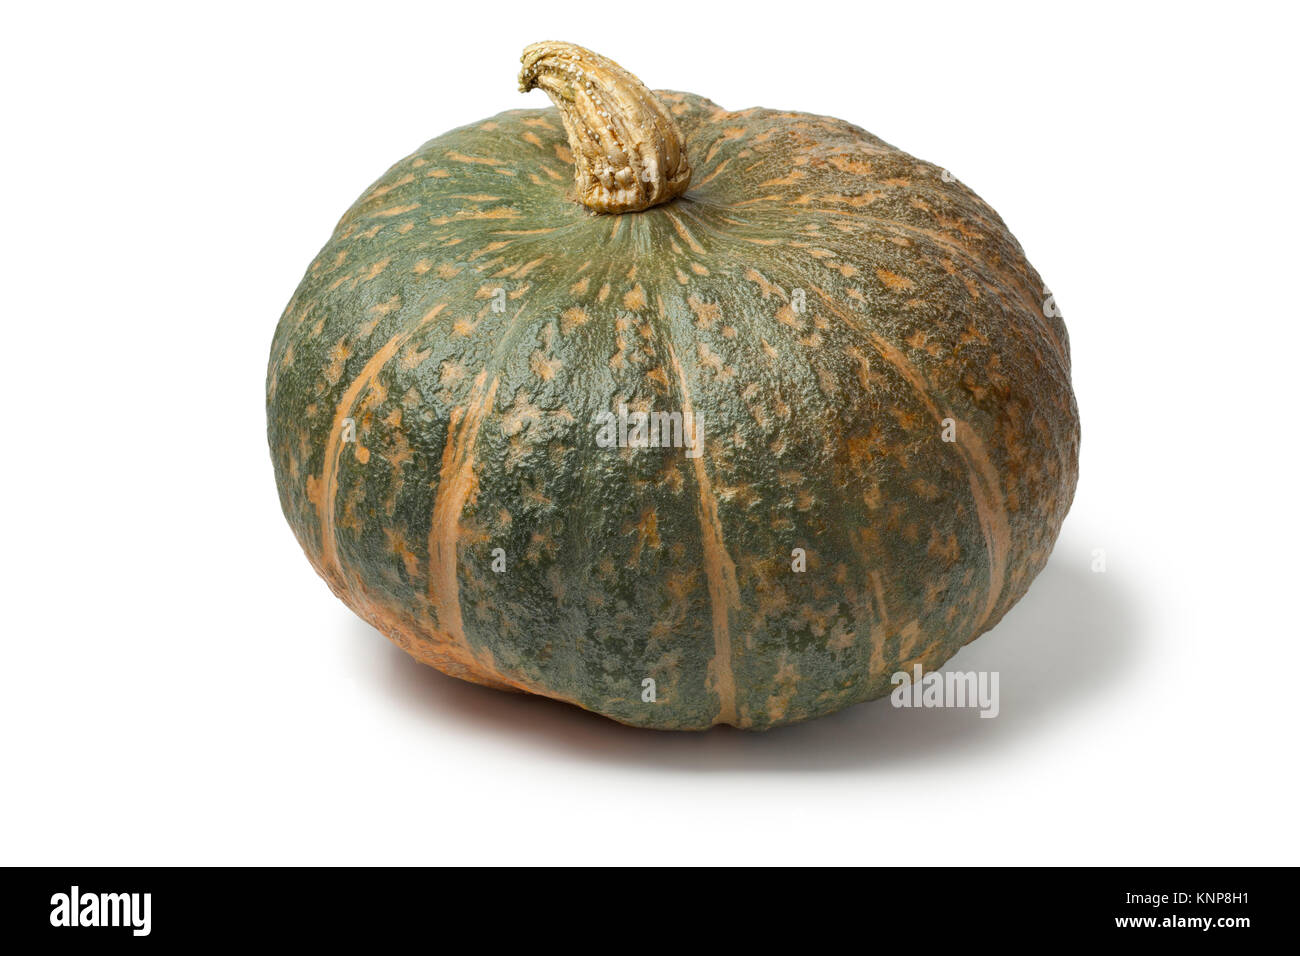 Fresh picked whole pumpkin Courge Delica Moretti on white background Stock Photo